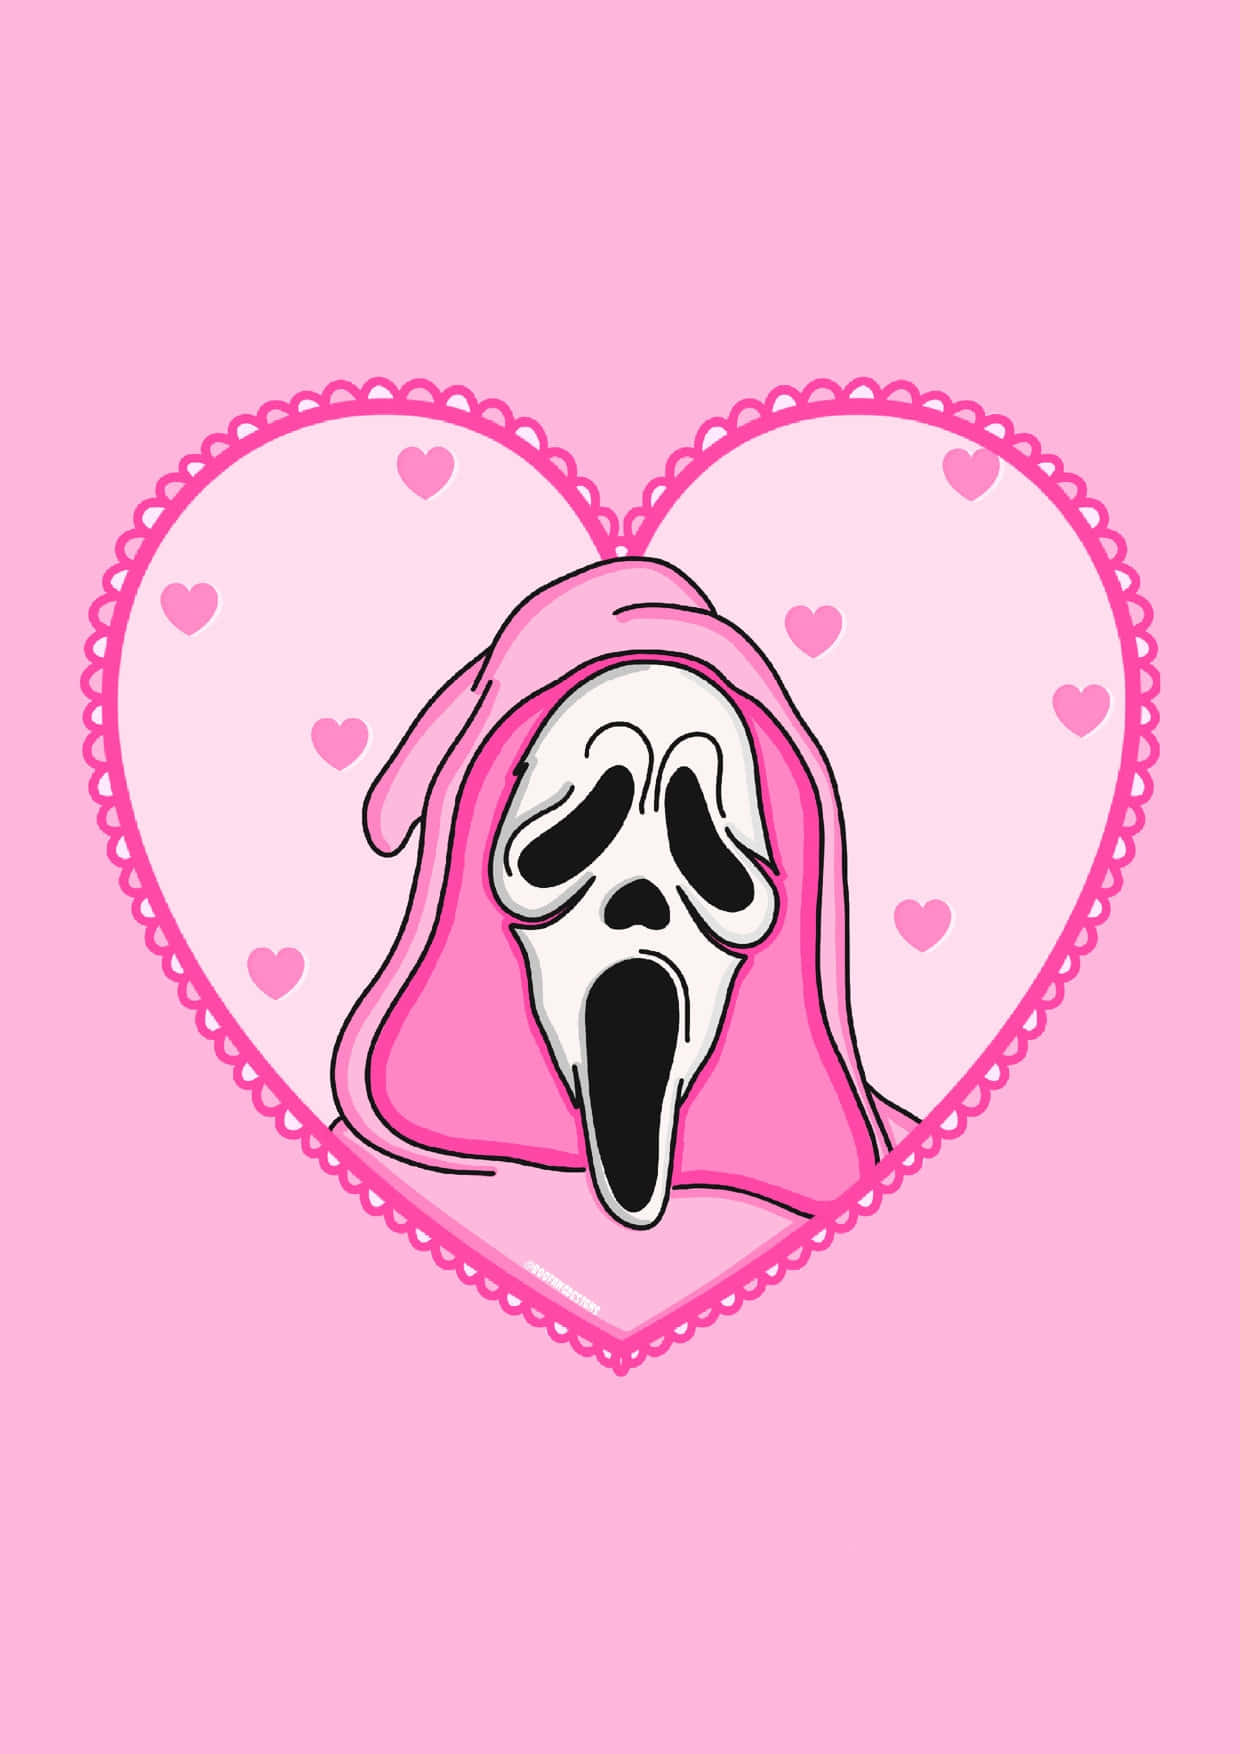 Download Pink Heart Ghost Face Pfp Wallpaper